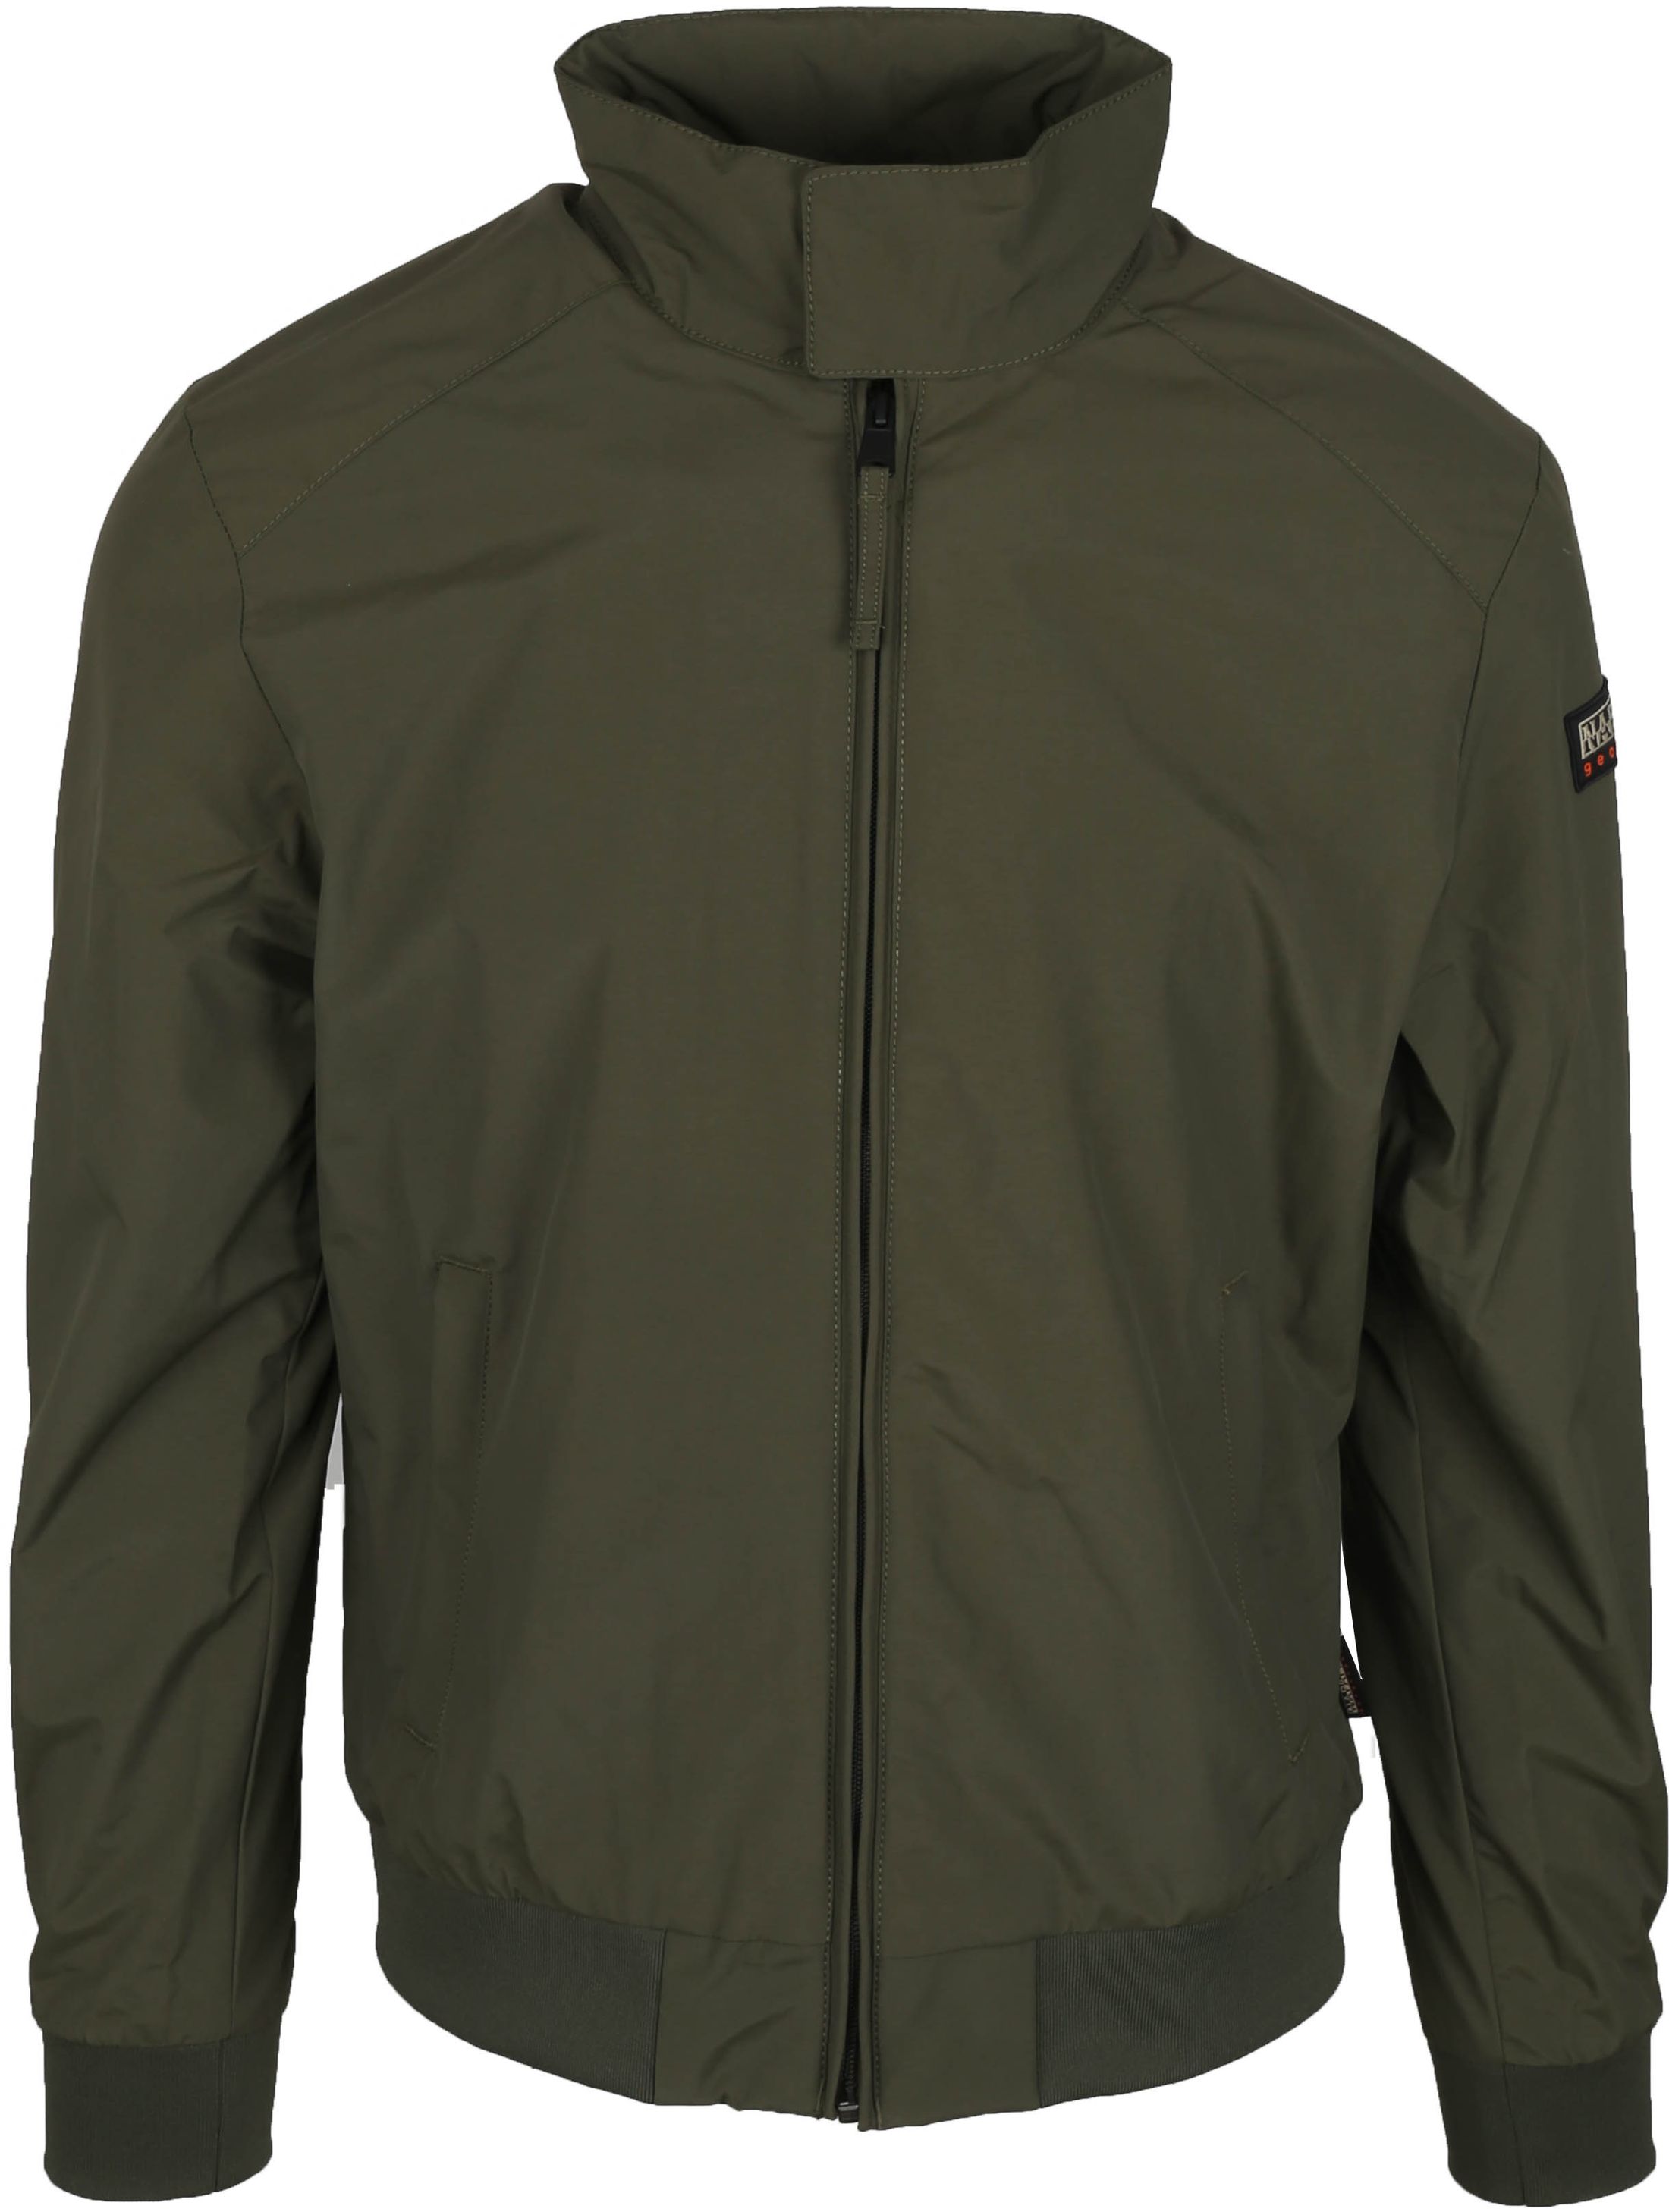 Napapijri Agard Jacket Green size 3XL